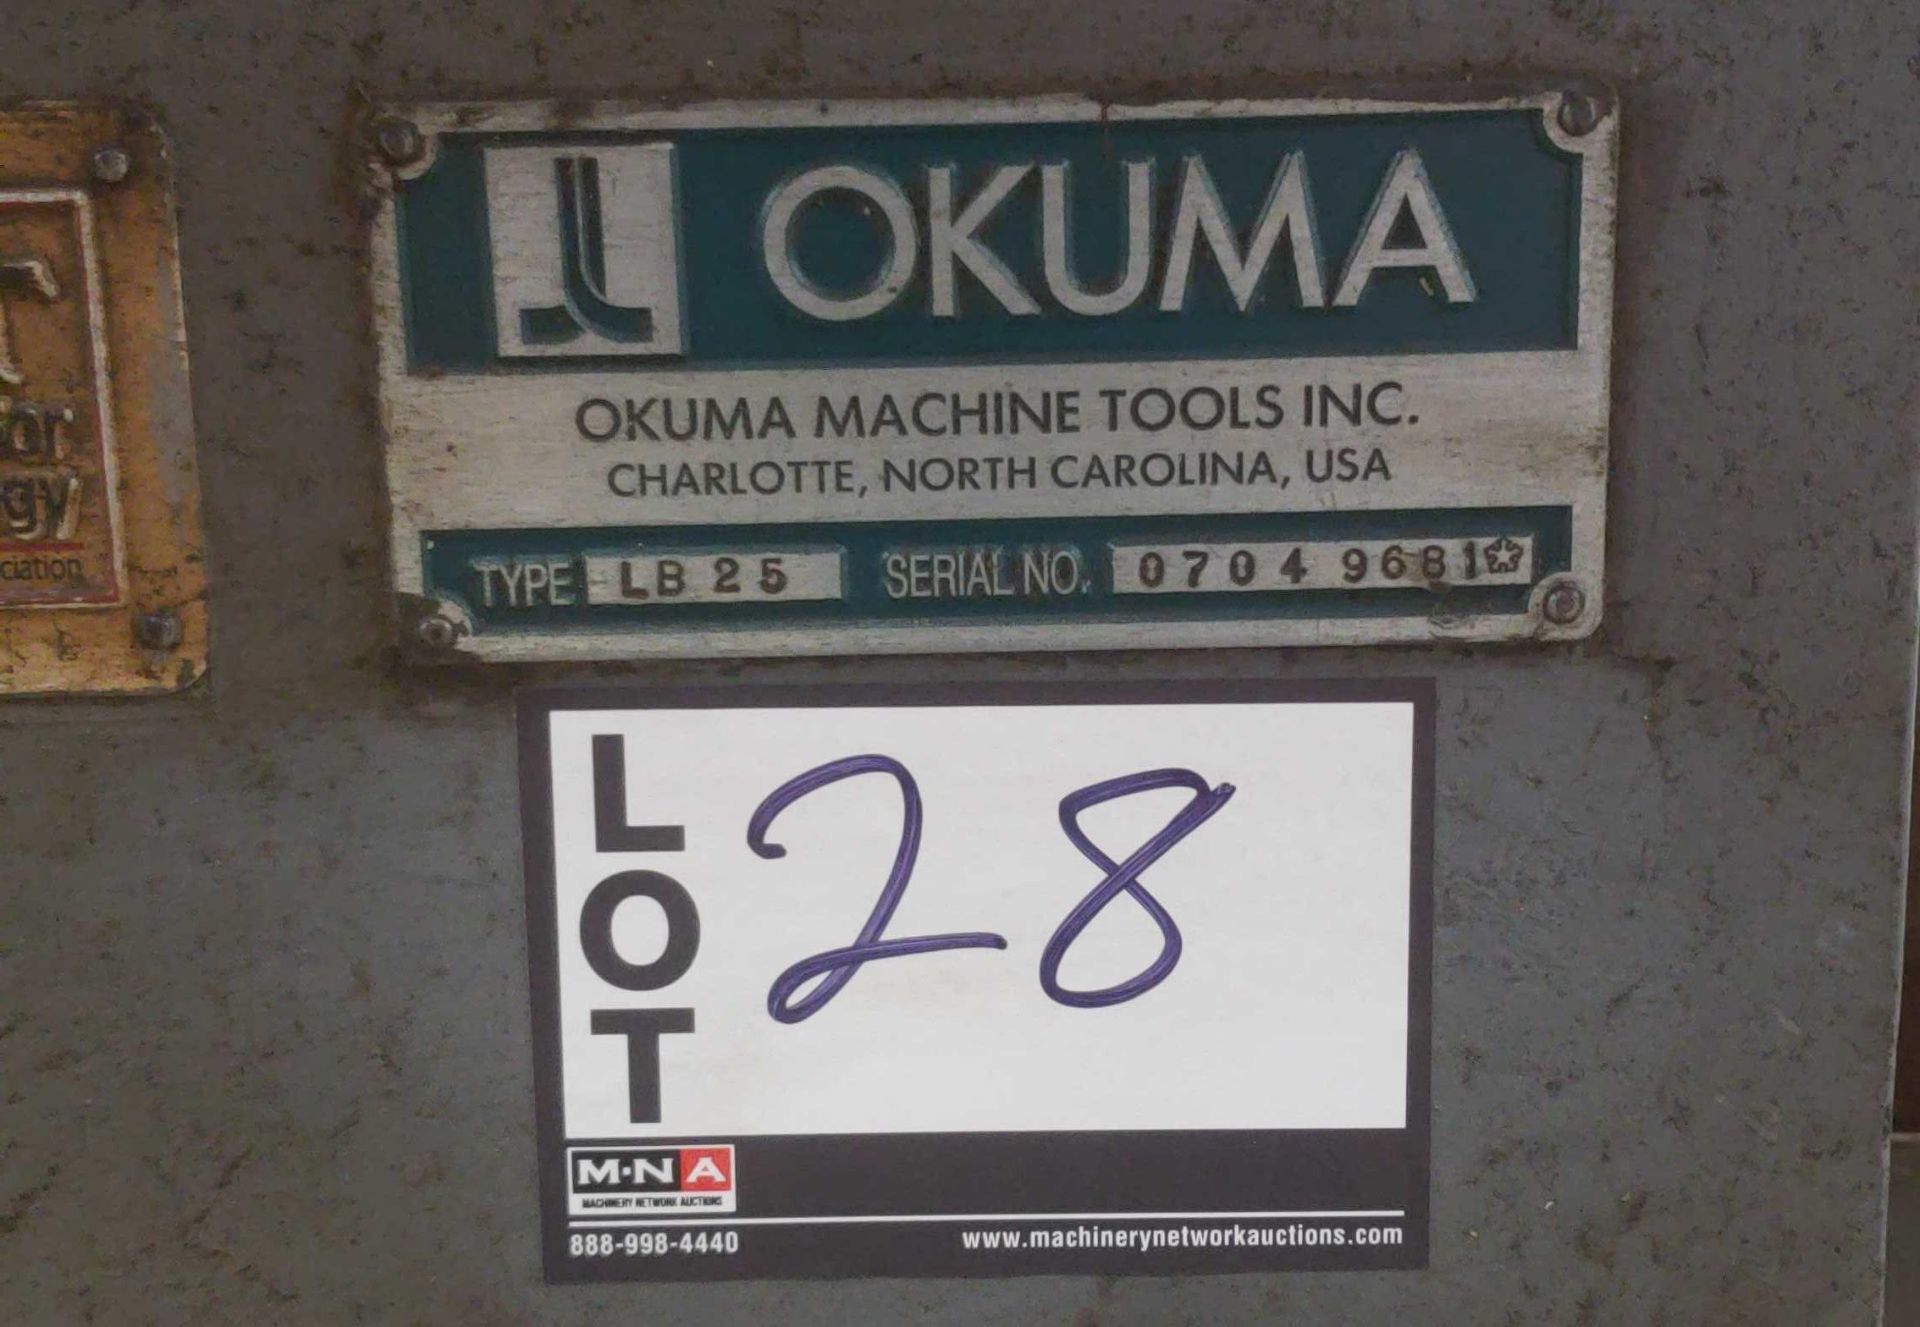 Okuma LB 25 2 Axis CNC lathe, 5020 control, chip conveyor, 10" chuck SN: 07049681 - Image 4 of 4